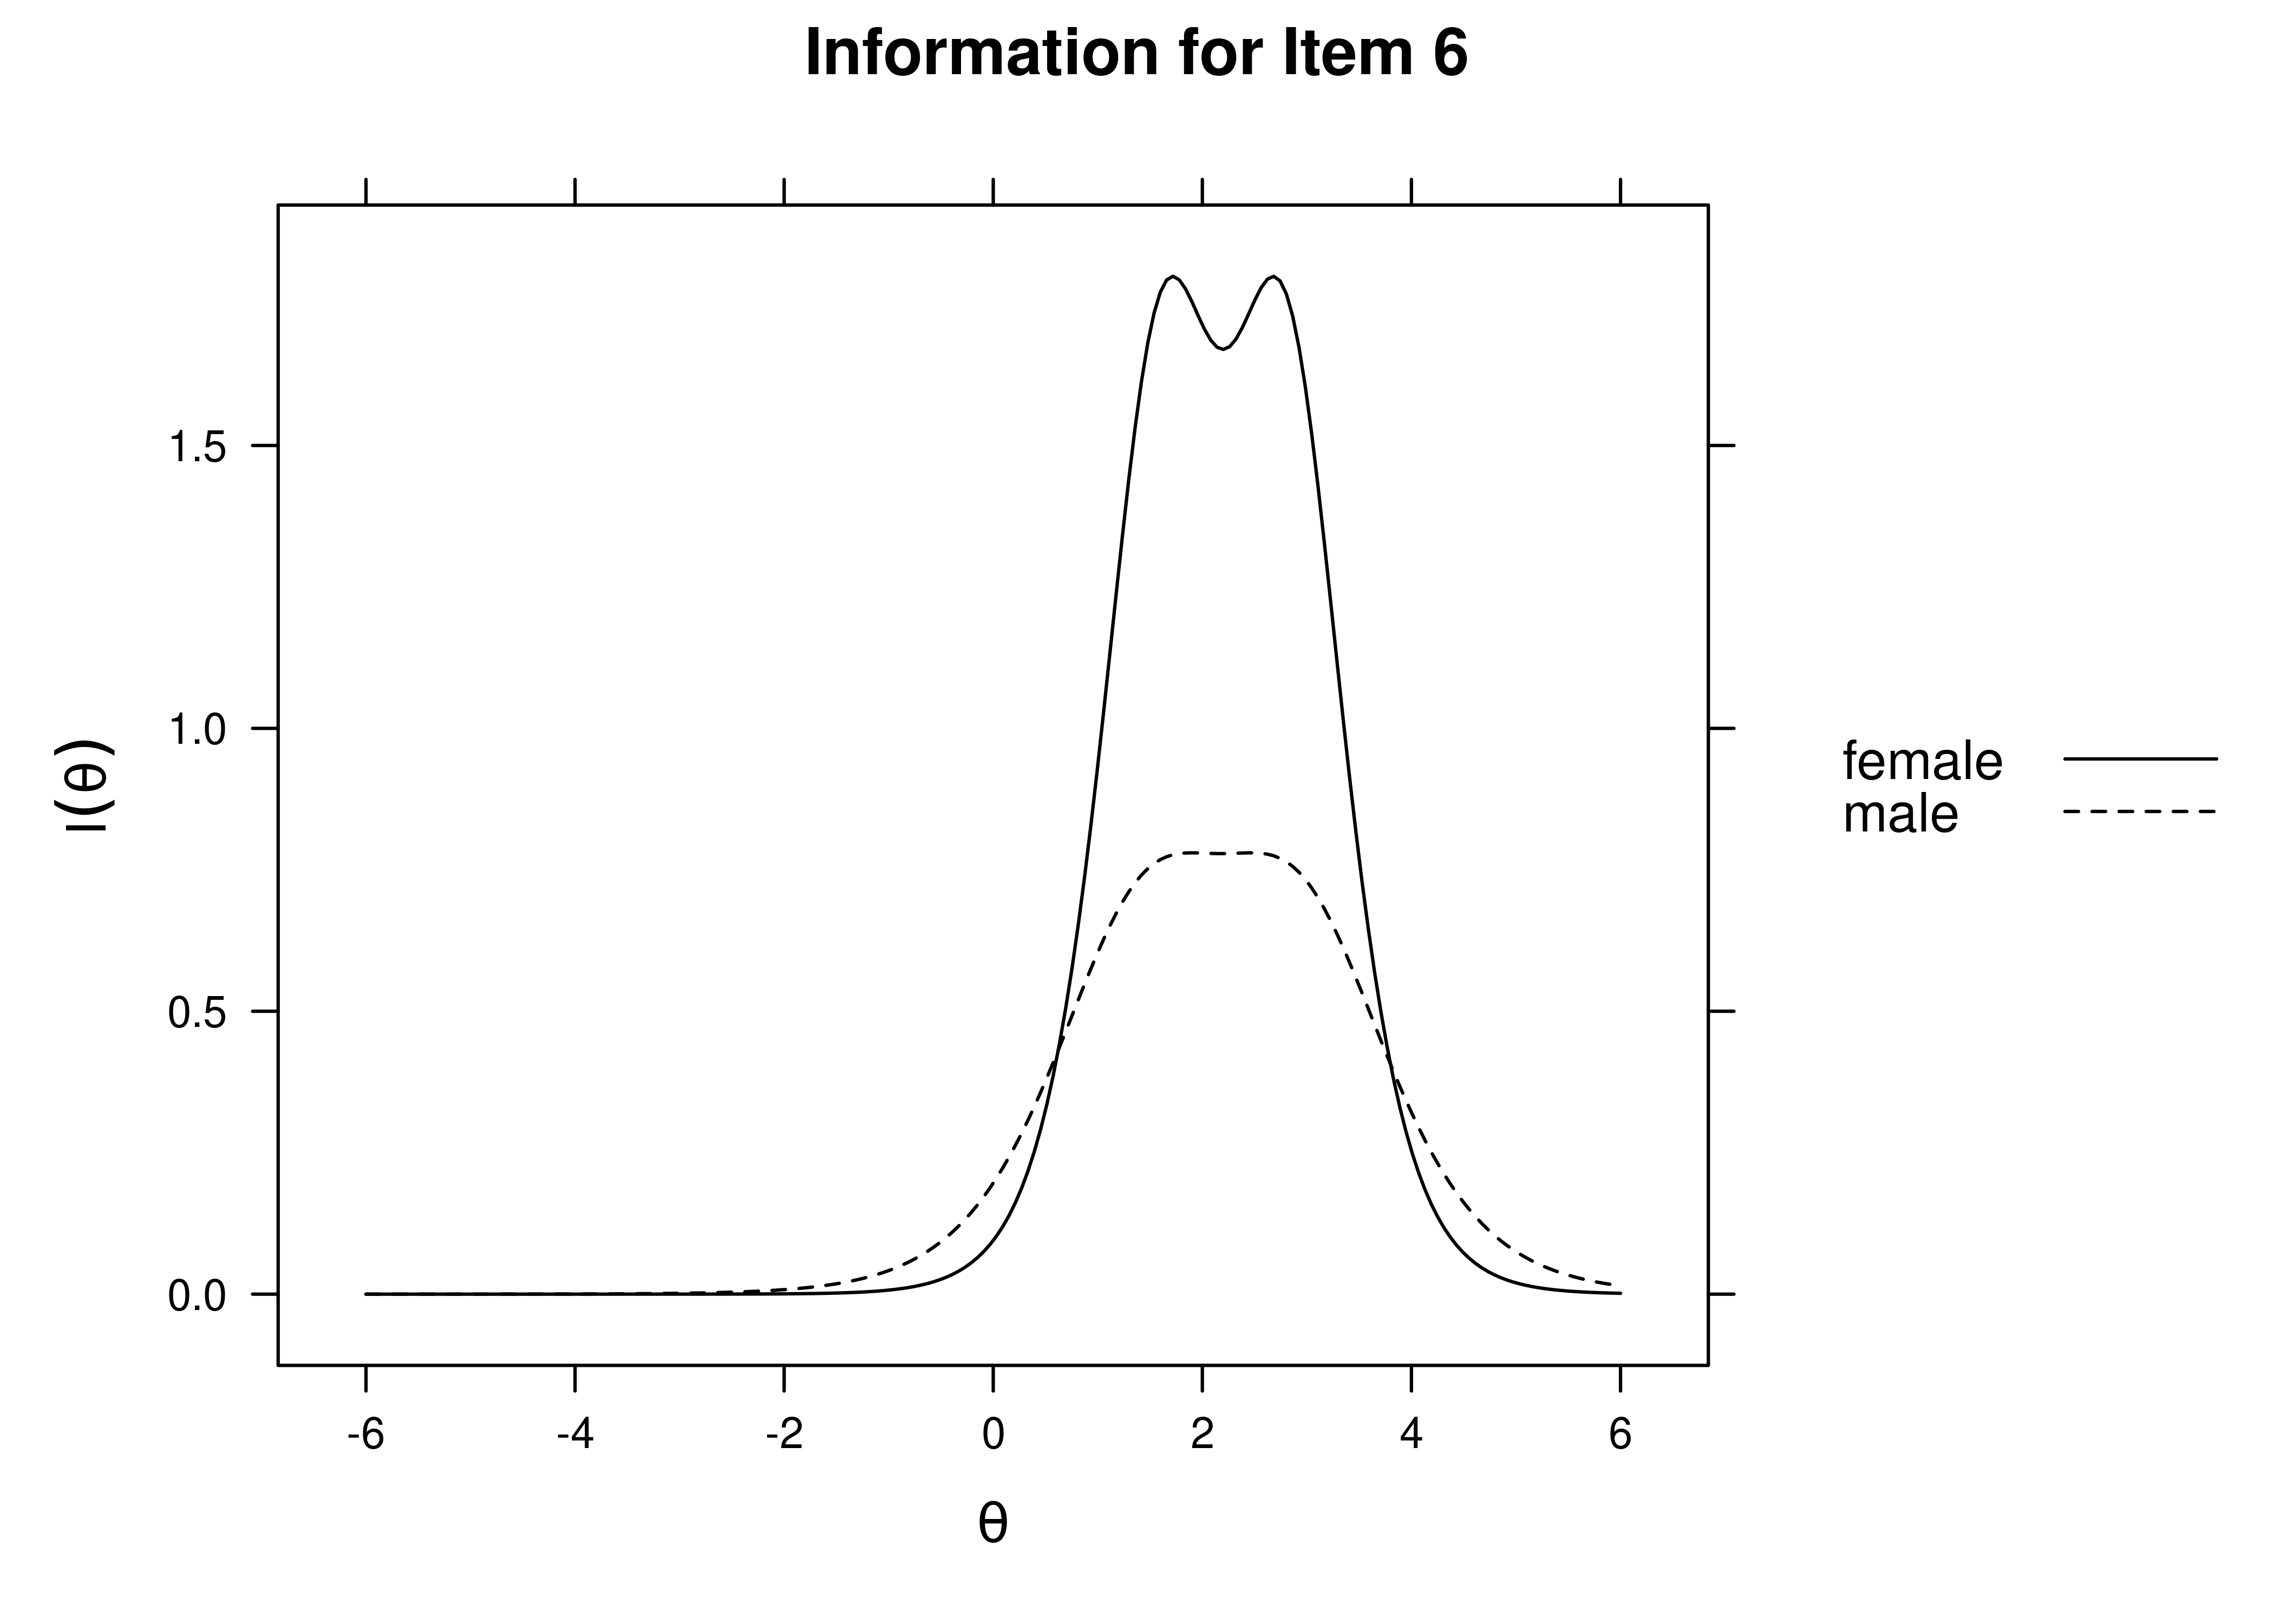 Item Information Curves by Sex: Item 6.